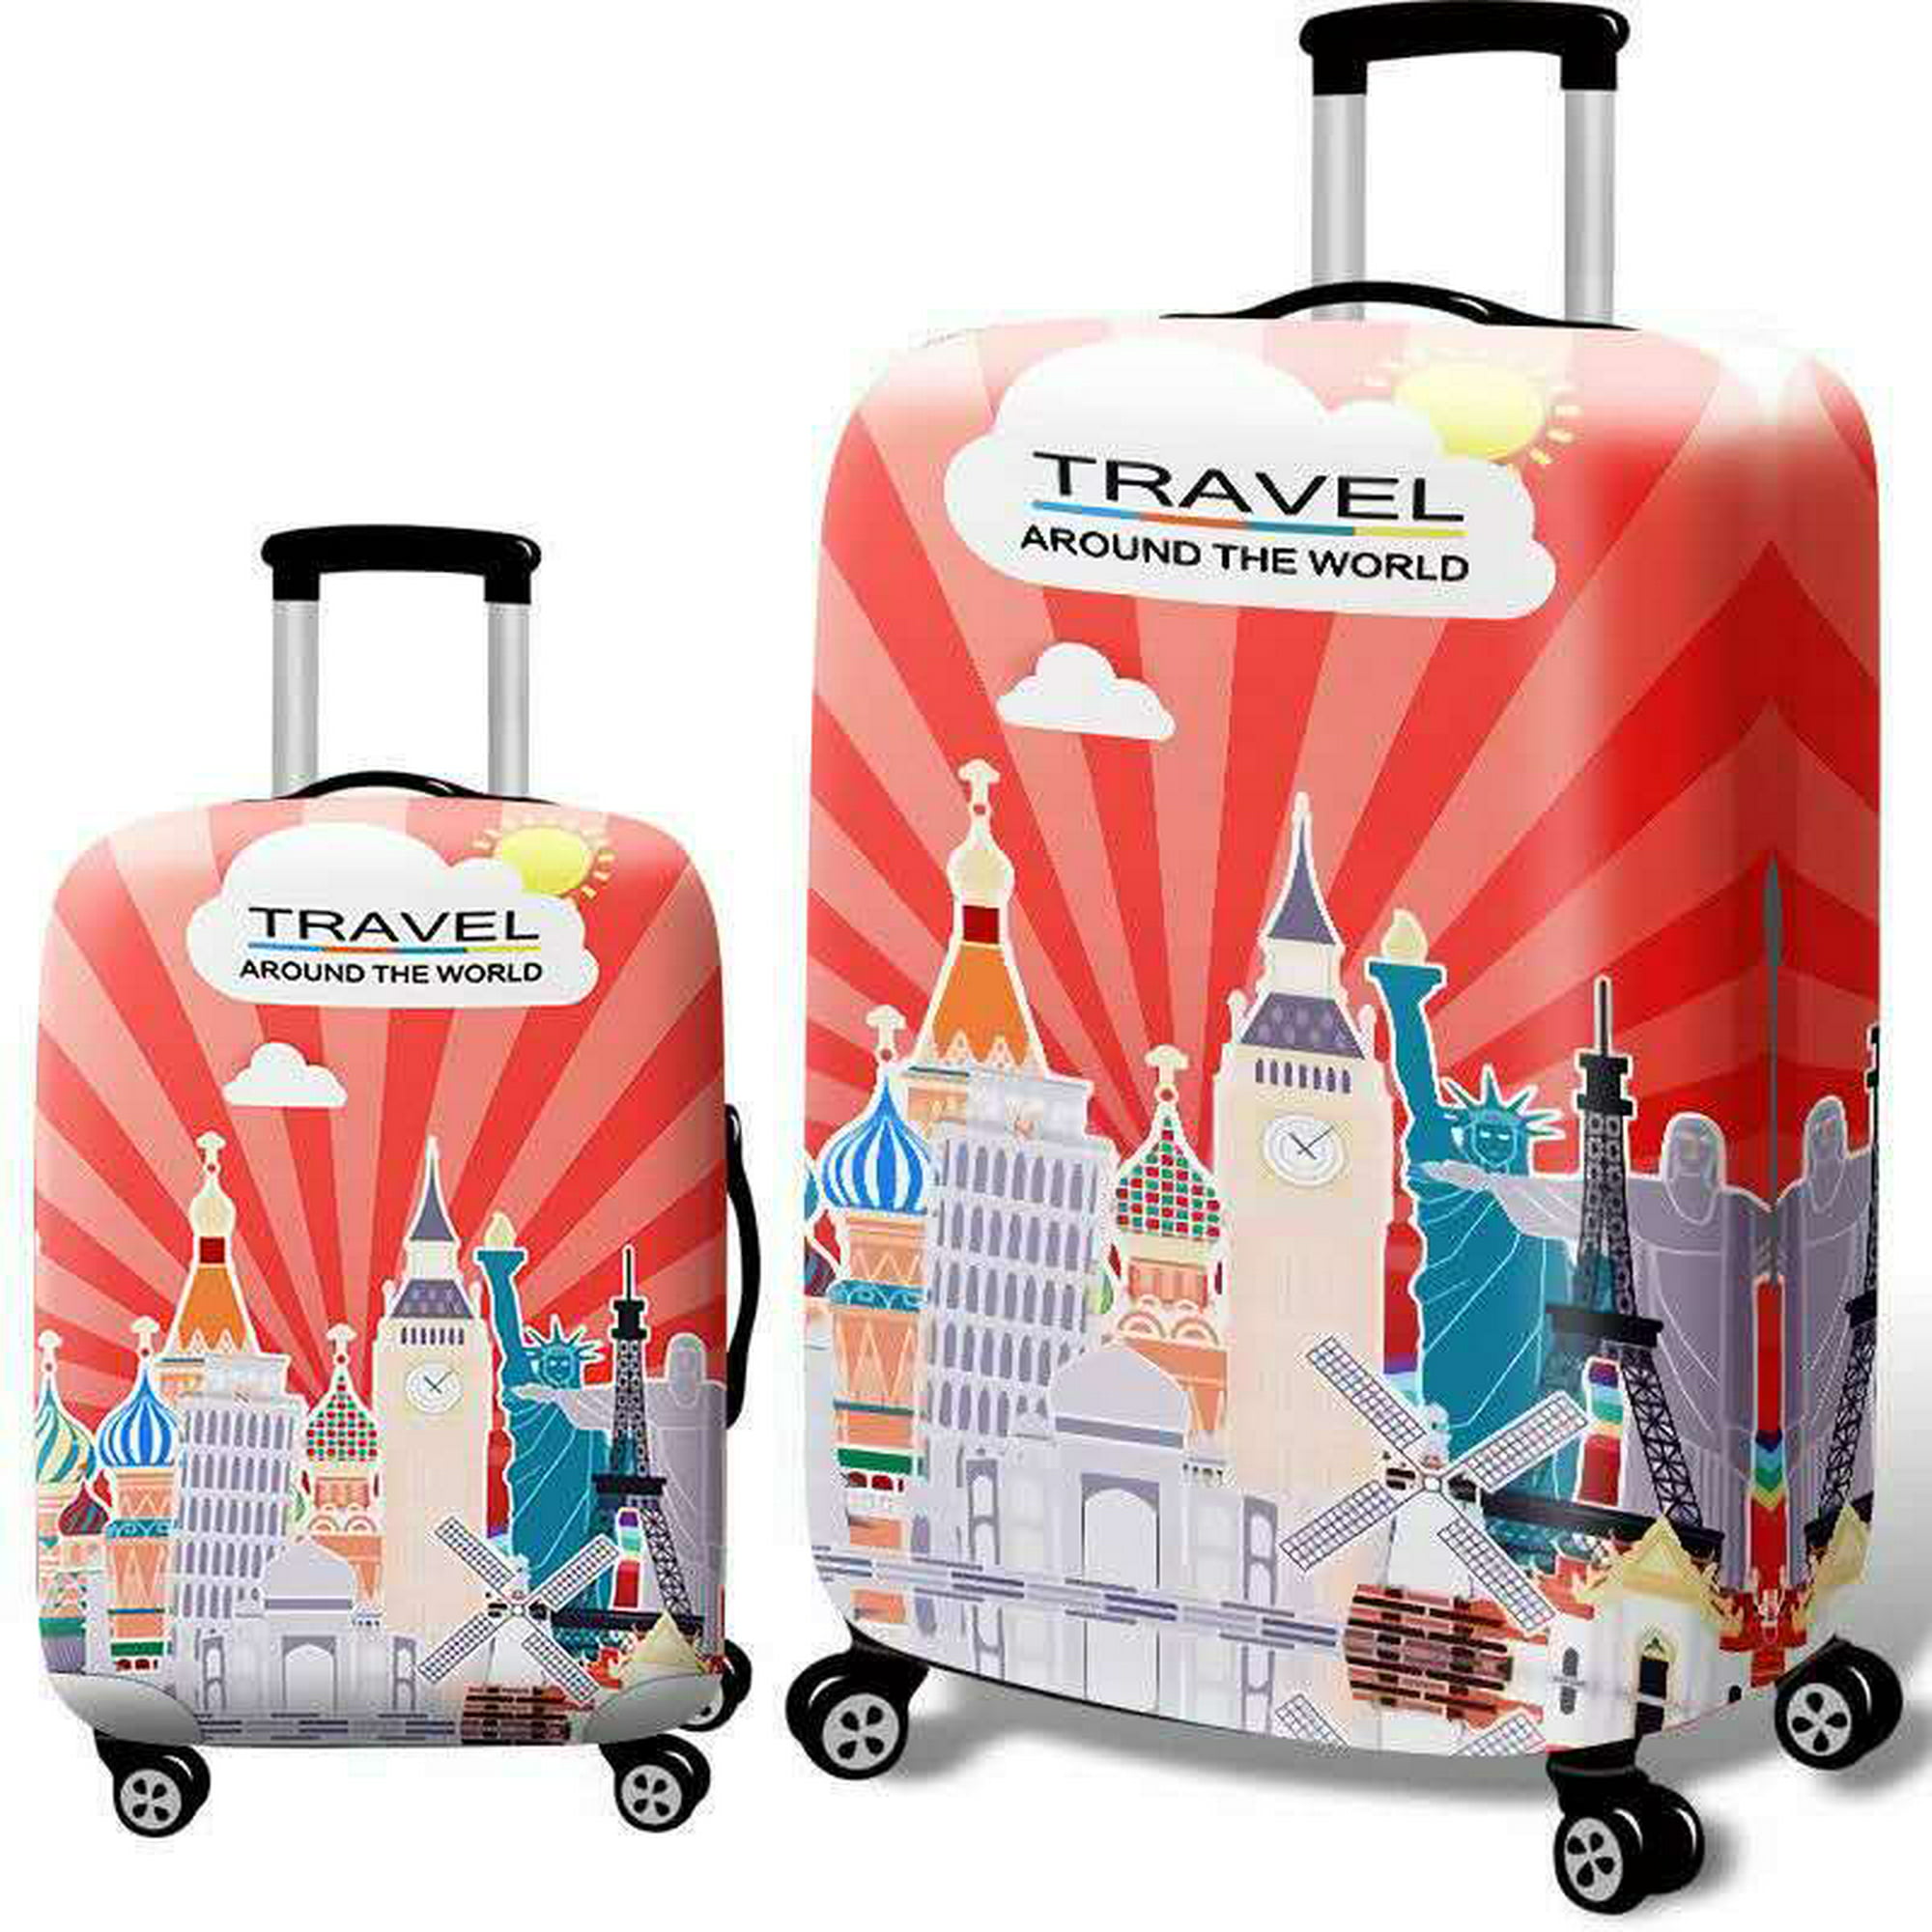 Fundas para maletas, fundas de equipaje de viaje para maleta, fundas de  equipaje, se adapta a equipaje de 18-32 pulgadas, 2